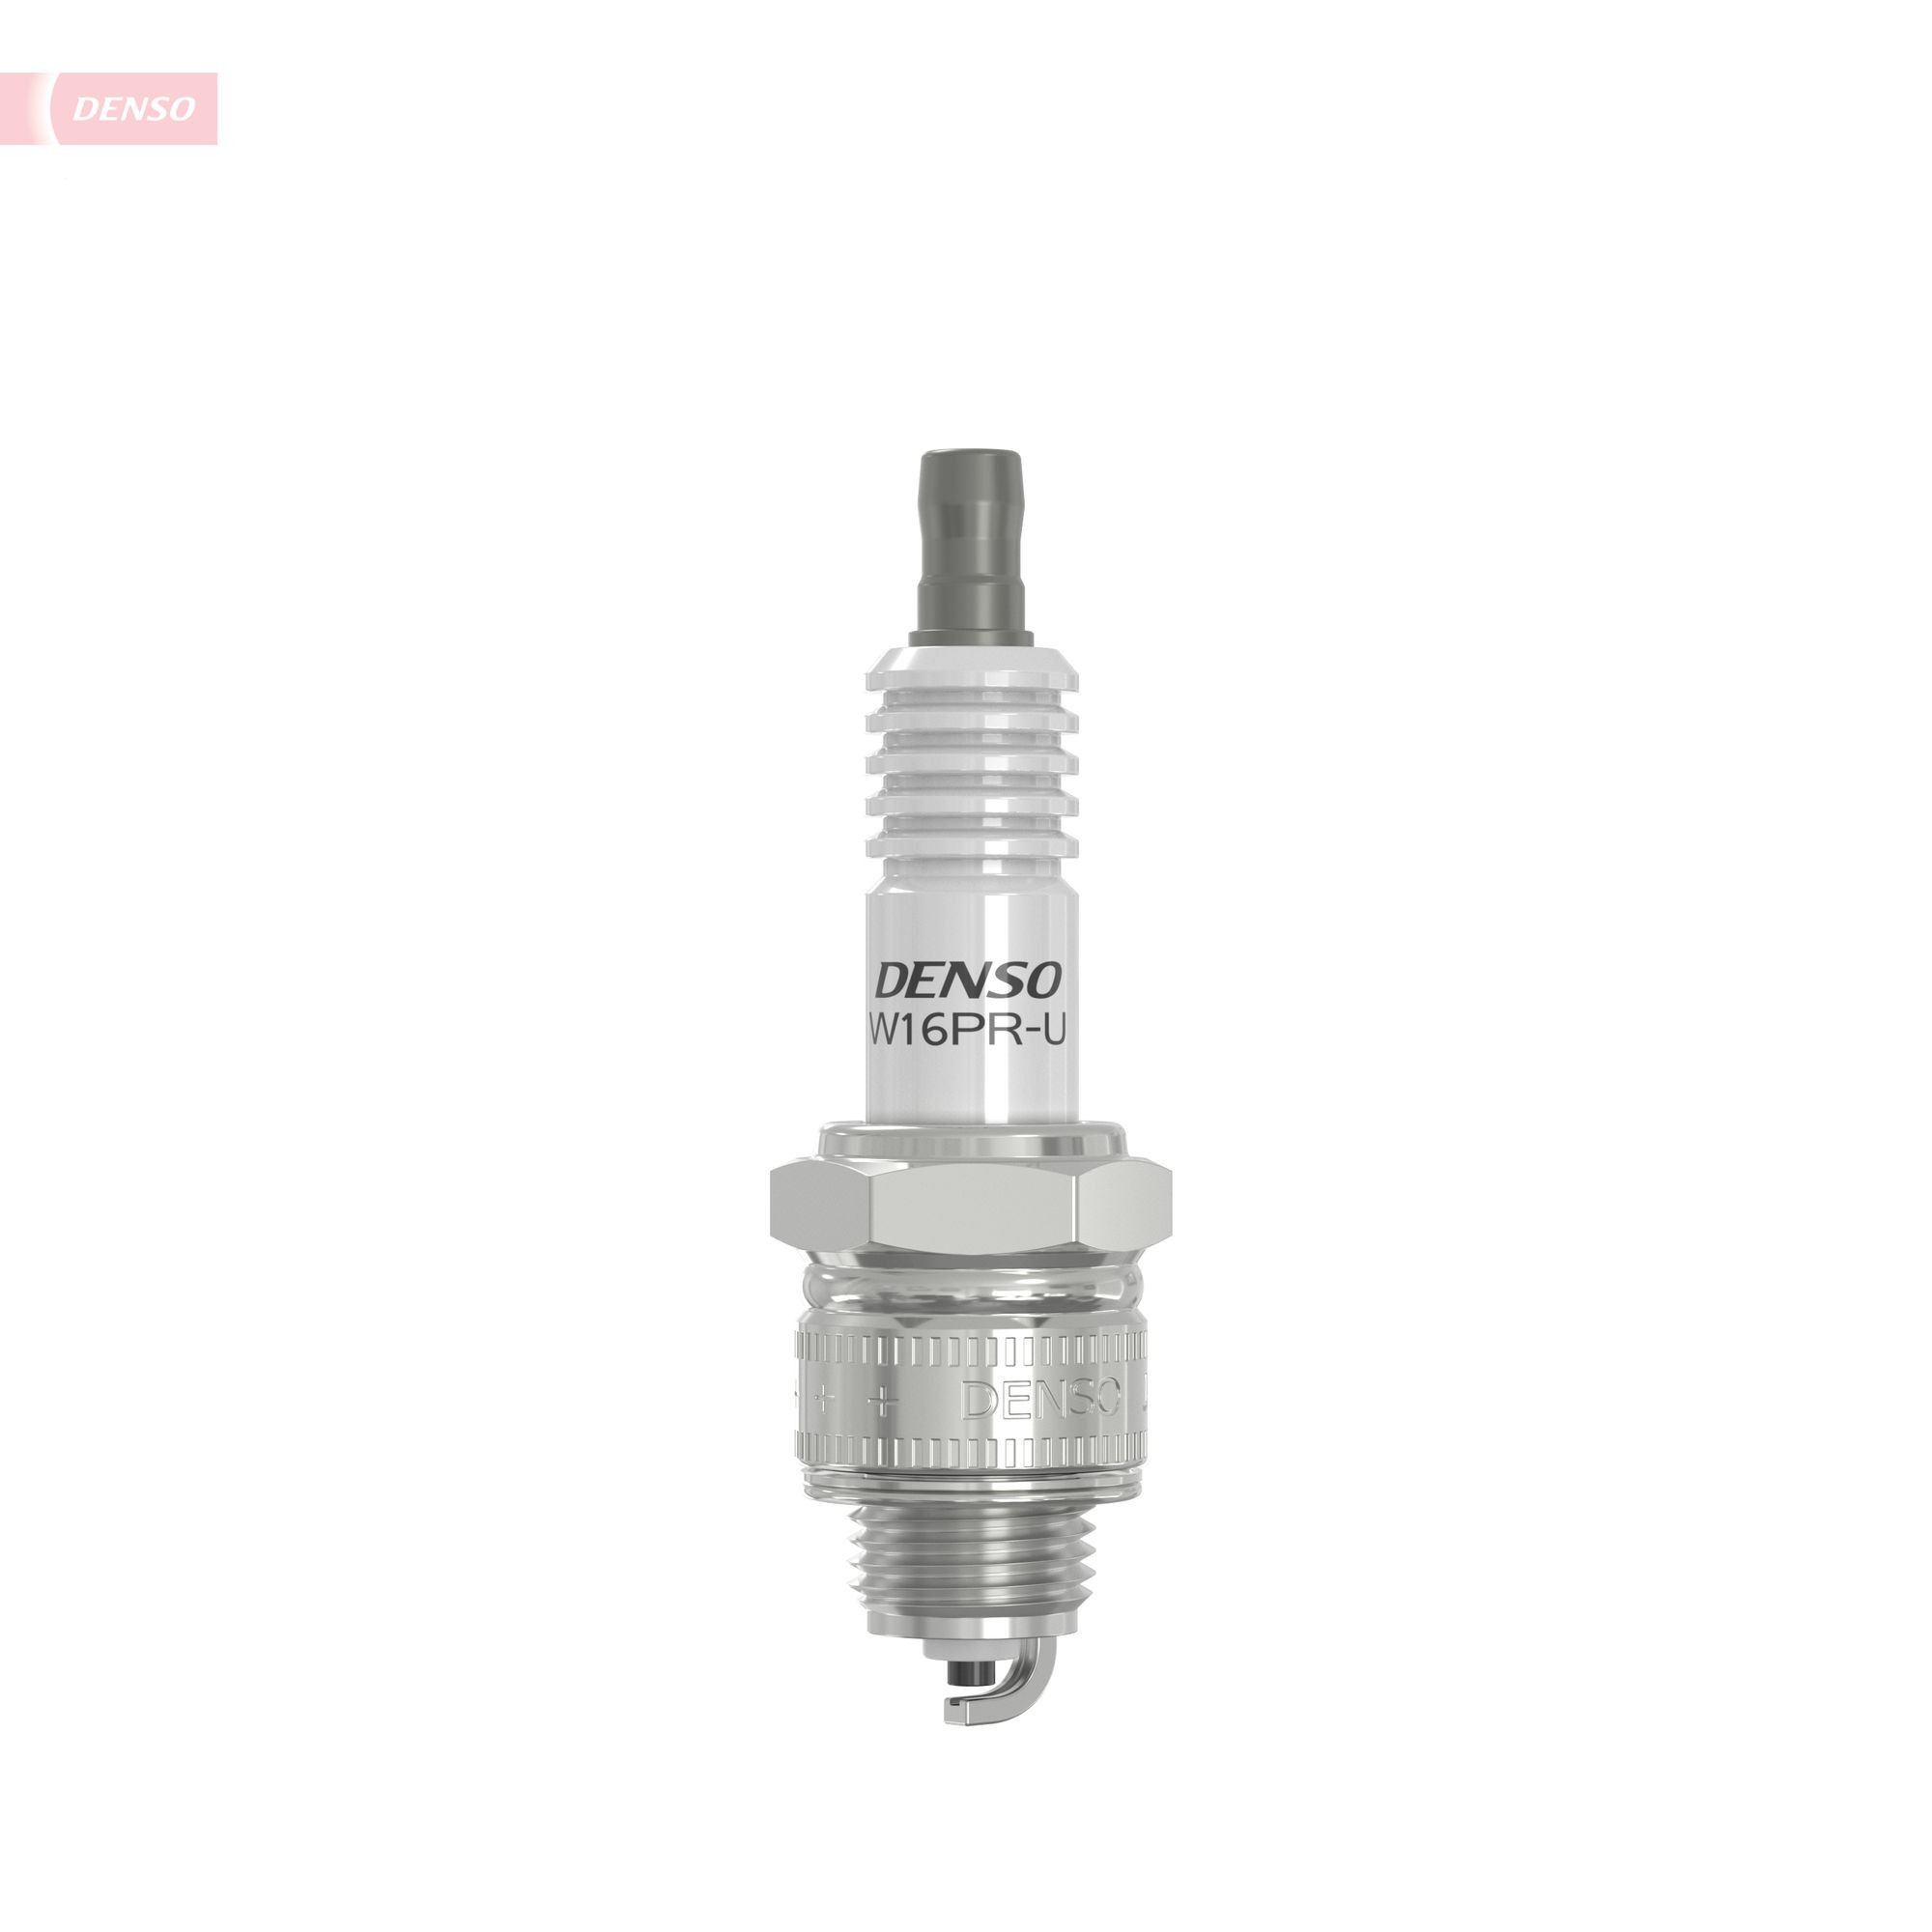 DENSO Nickel W16PR-U Spark plug Spanner Size: 20.6